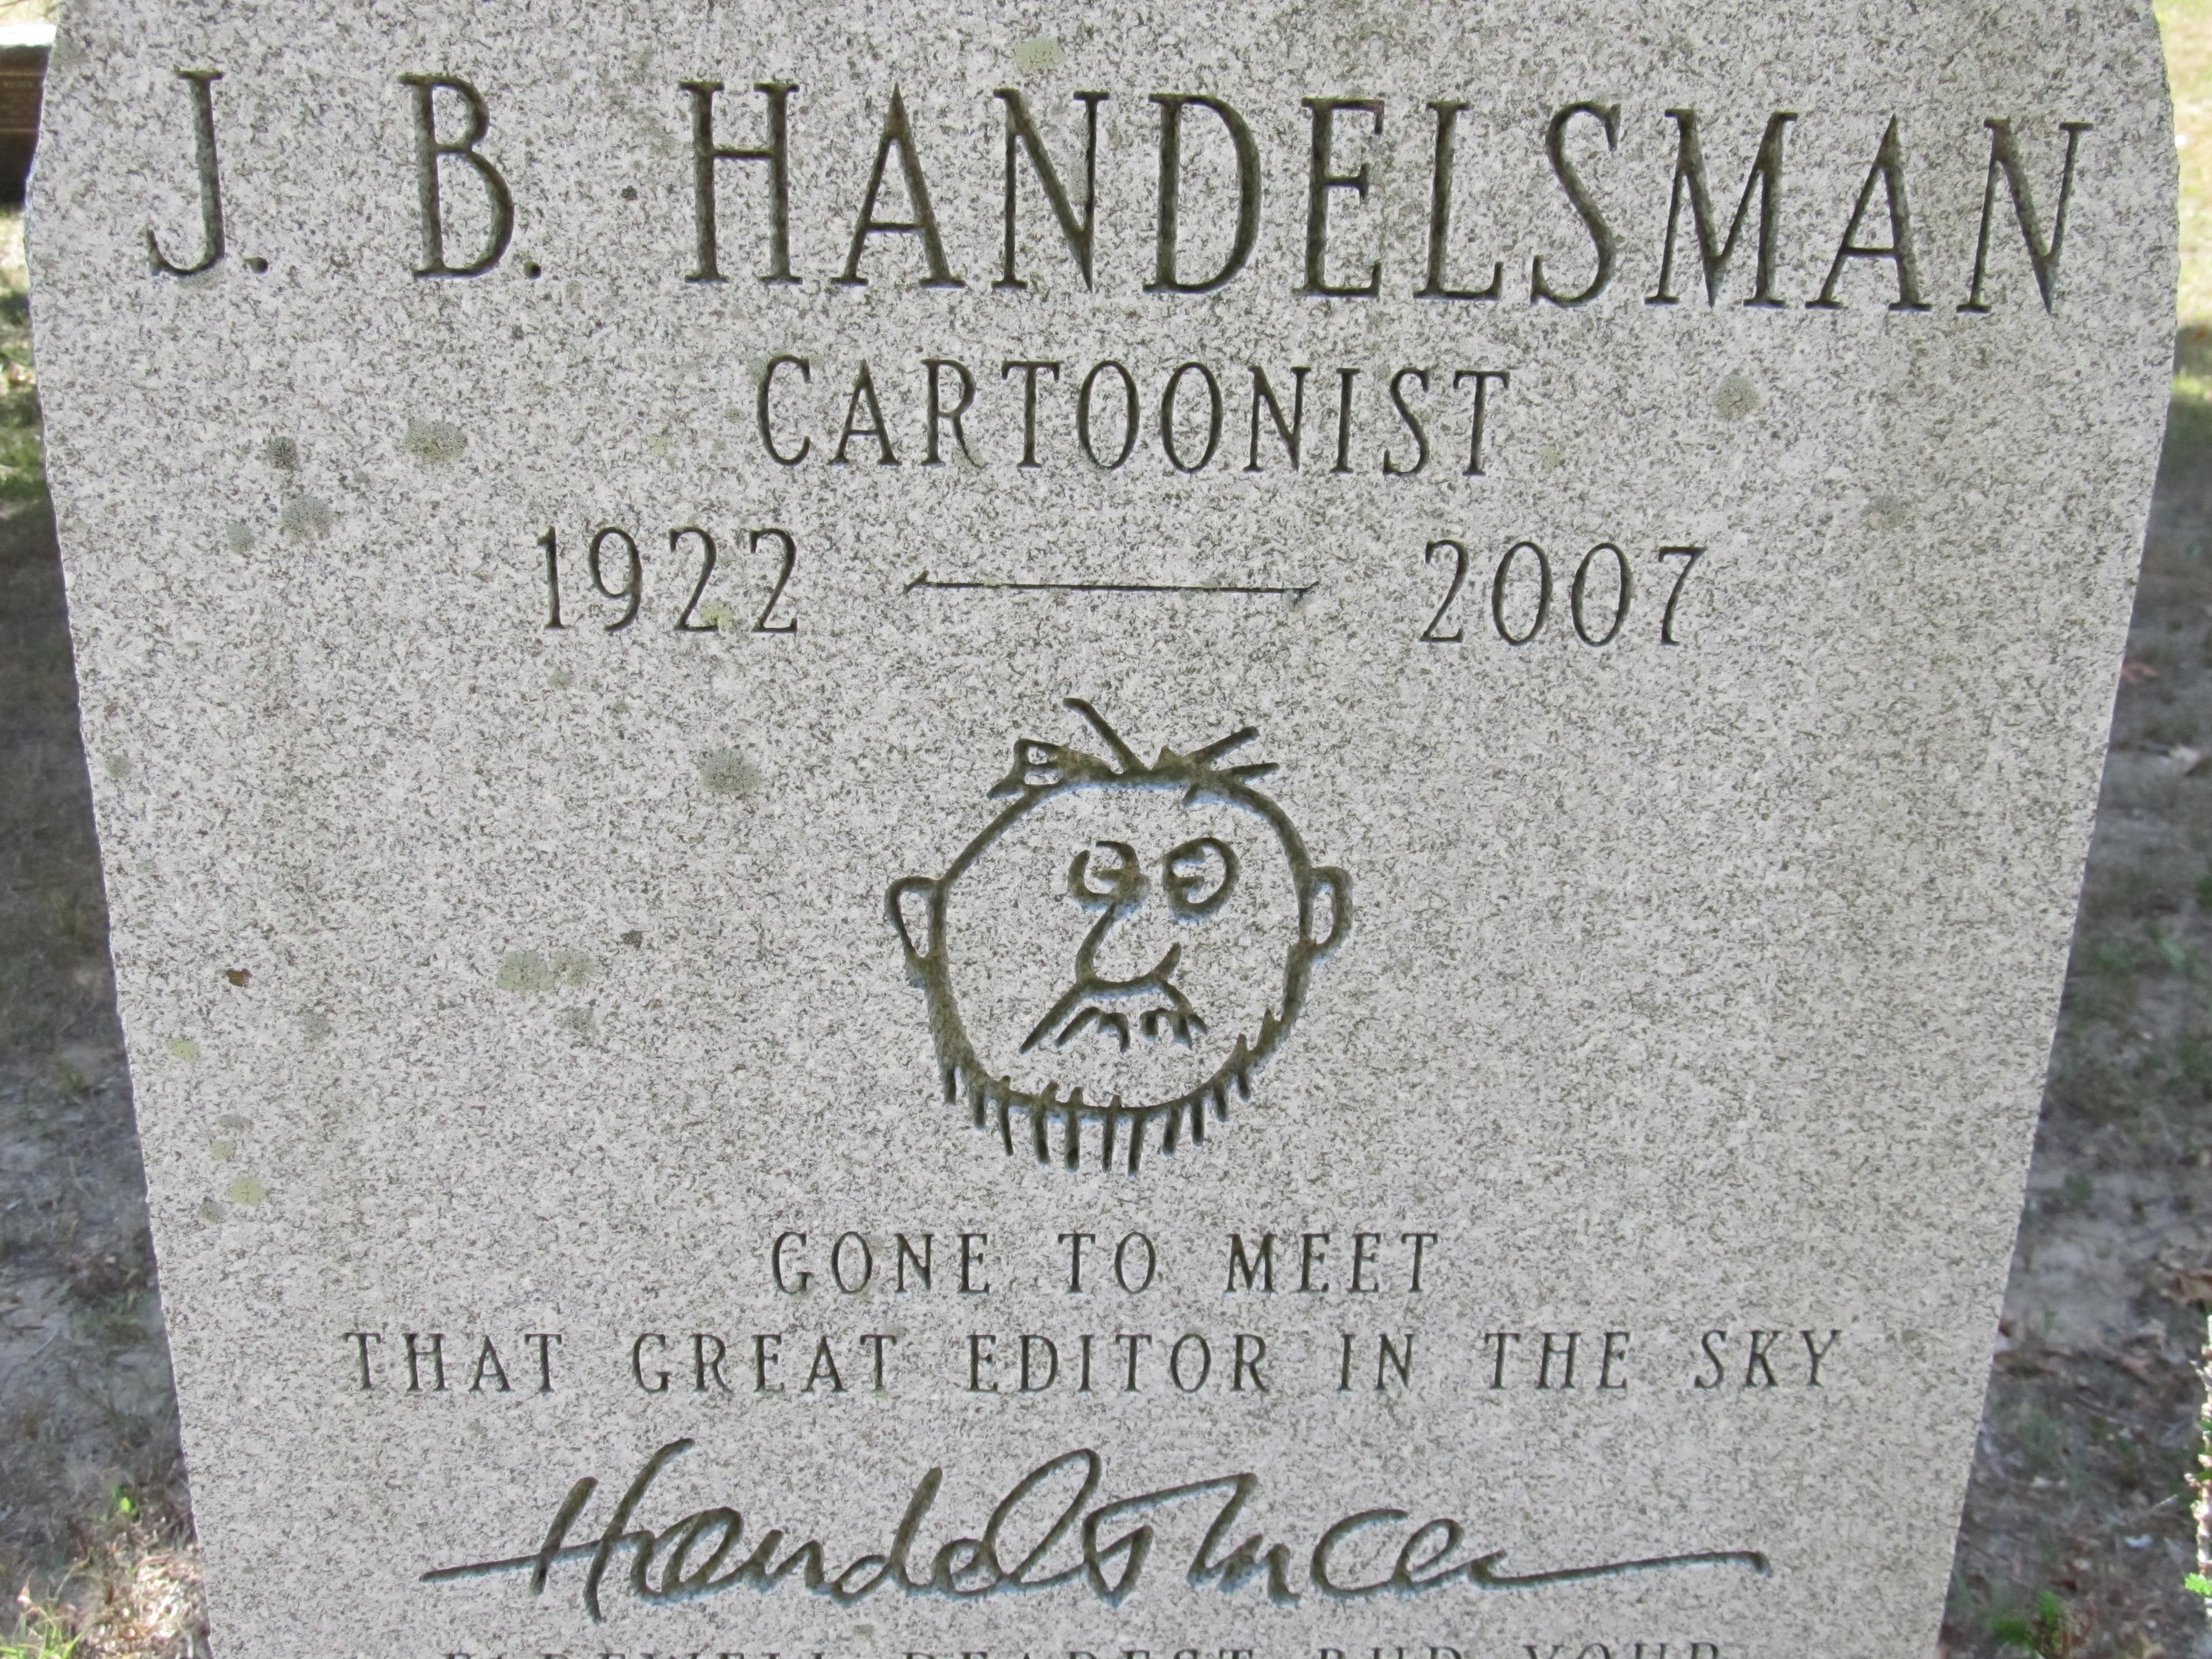 New Yorker cartoonist J.B. Handelsman